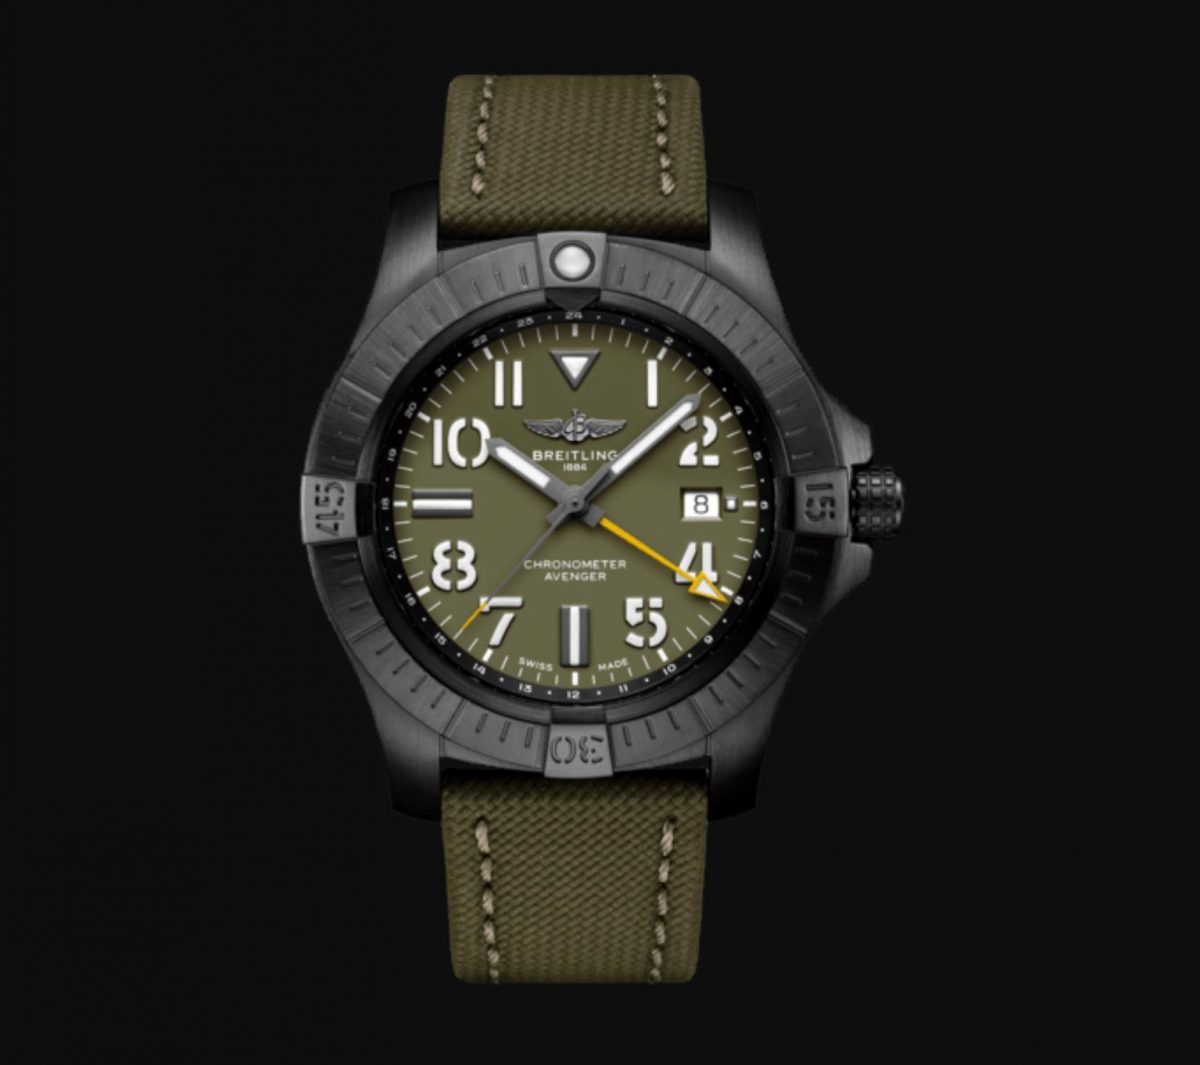 The titanium fake watch is waterproof.